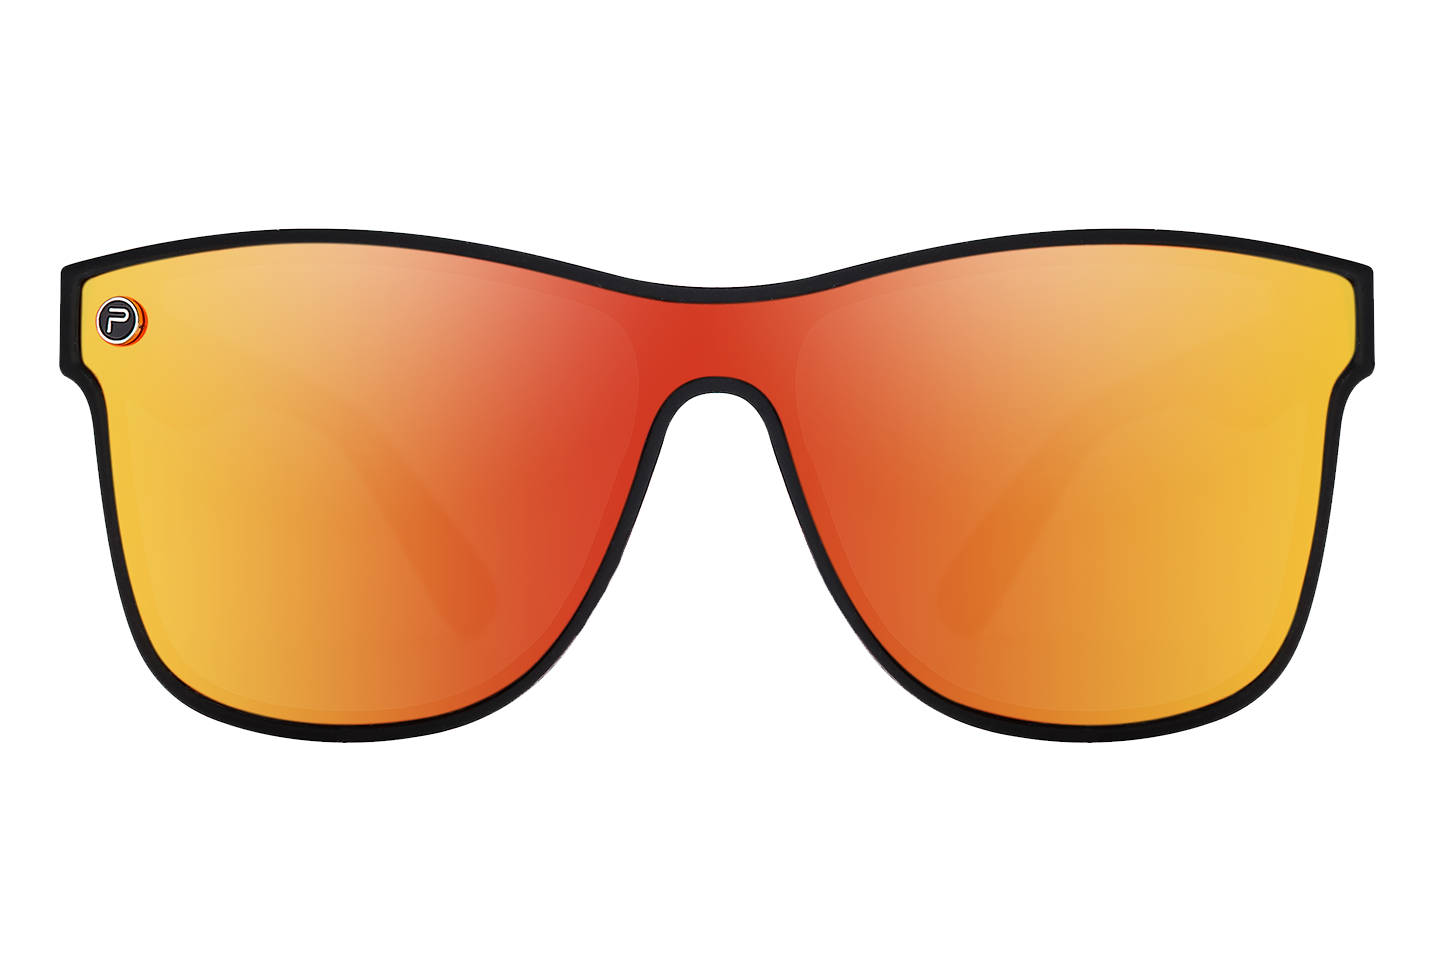 Infinite Rouge - Sunglasses With Single Lens | SUNHAUK